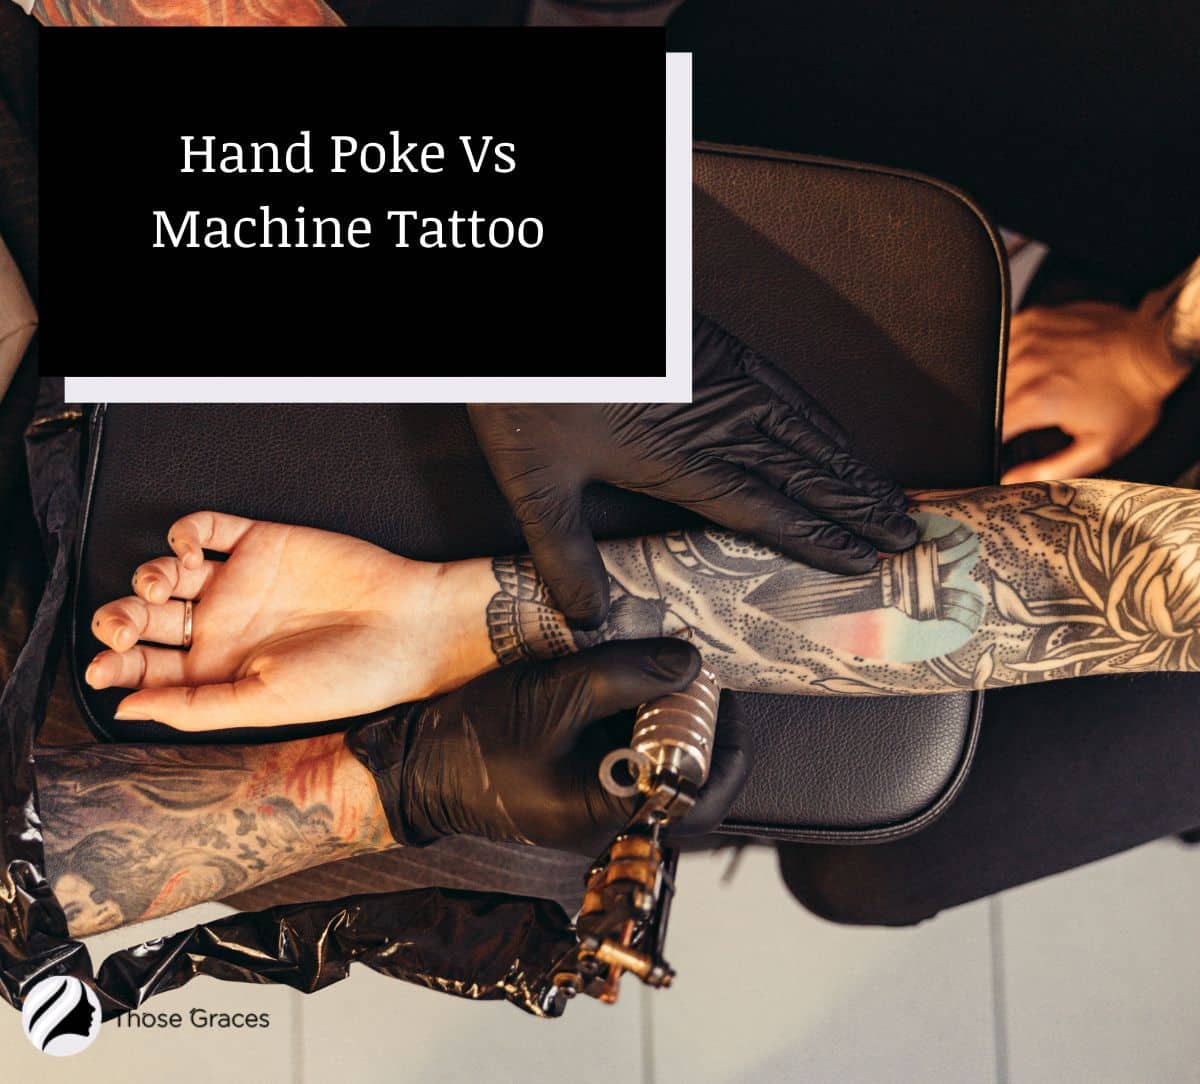 Hand Poke Vs Machine: a man tattooing the lady's arm